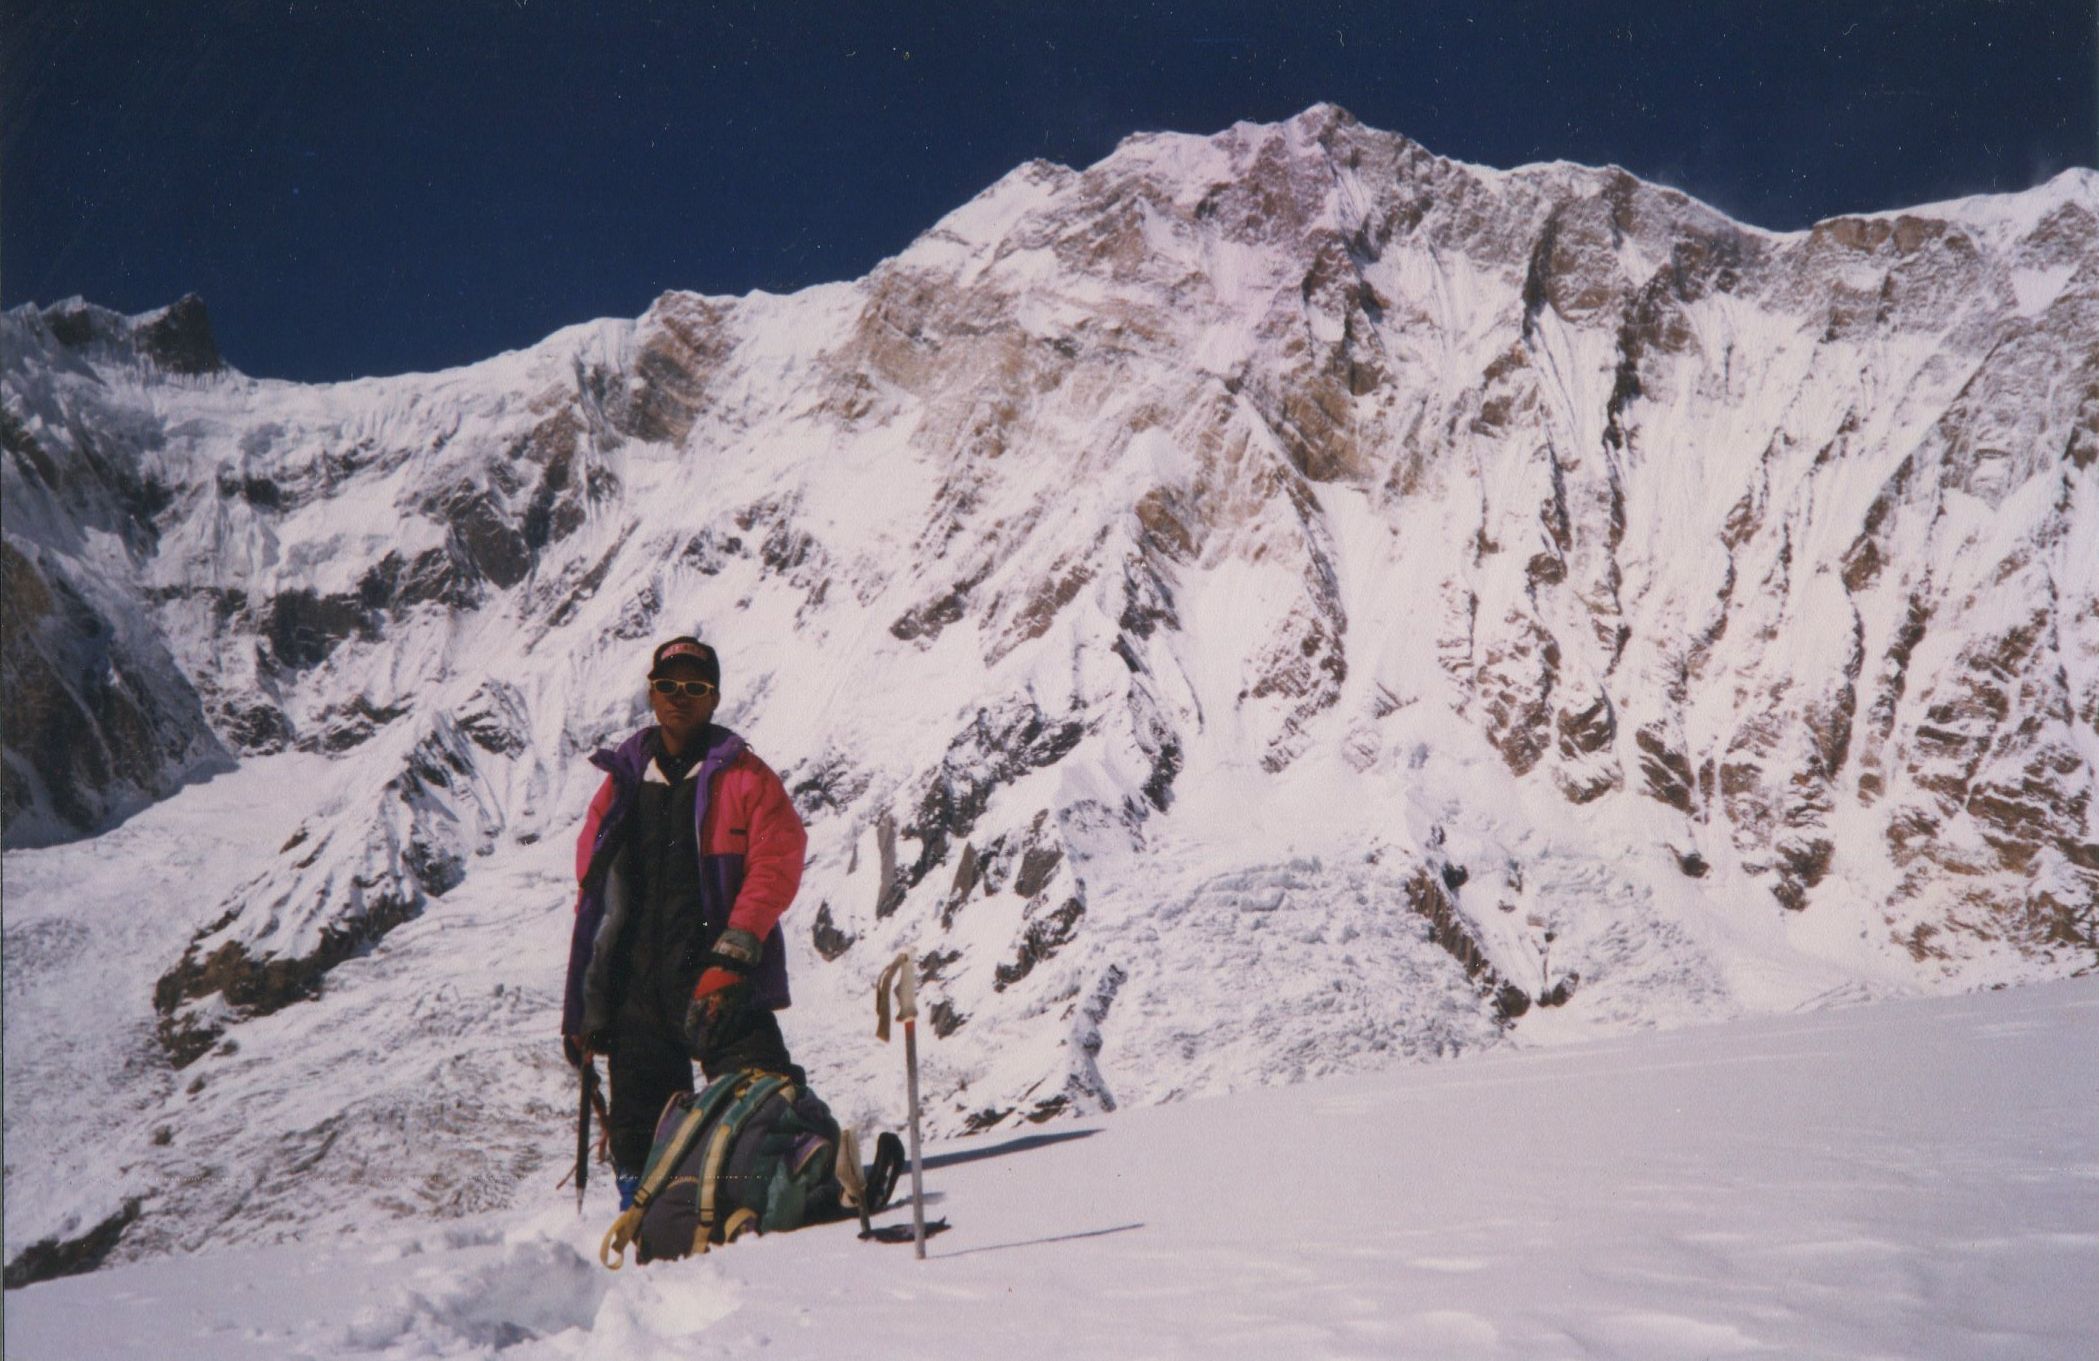 Mount Annapurna I from summit of Rakshi Peak